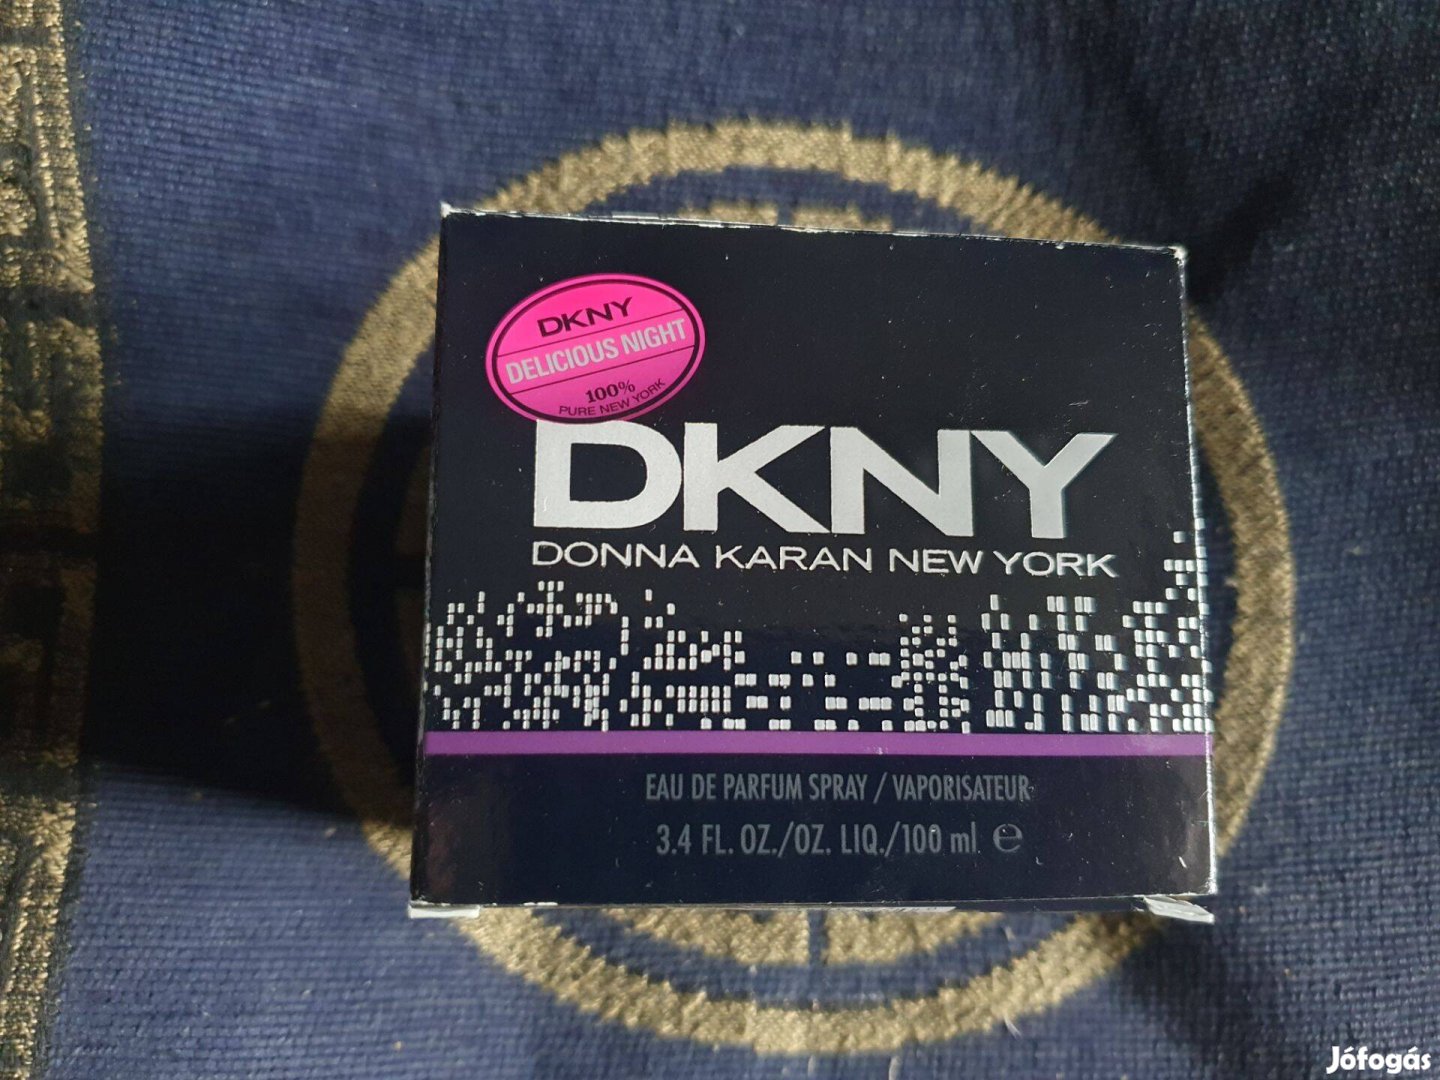 DKNY Delicious Night Eau de parfum 100 ml -női parfüm